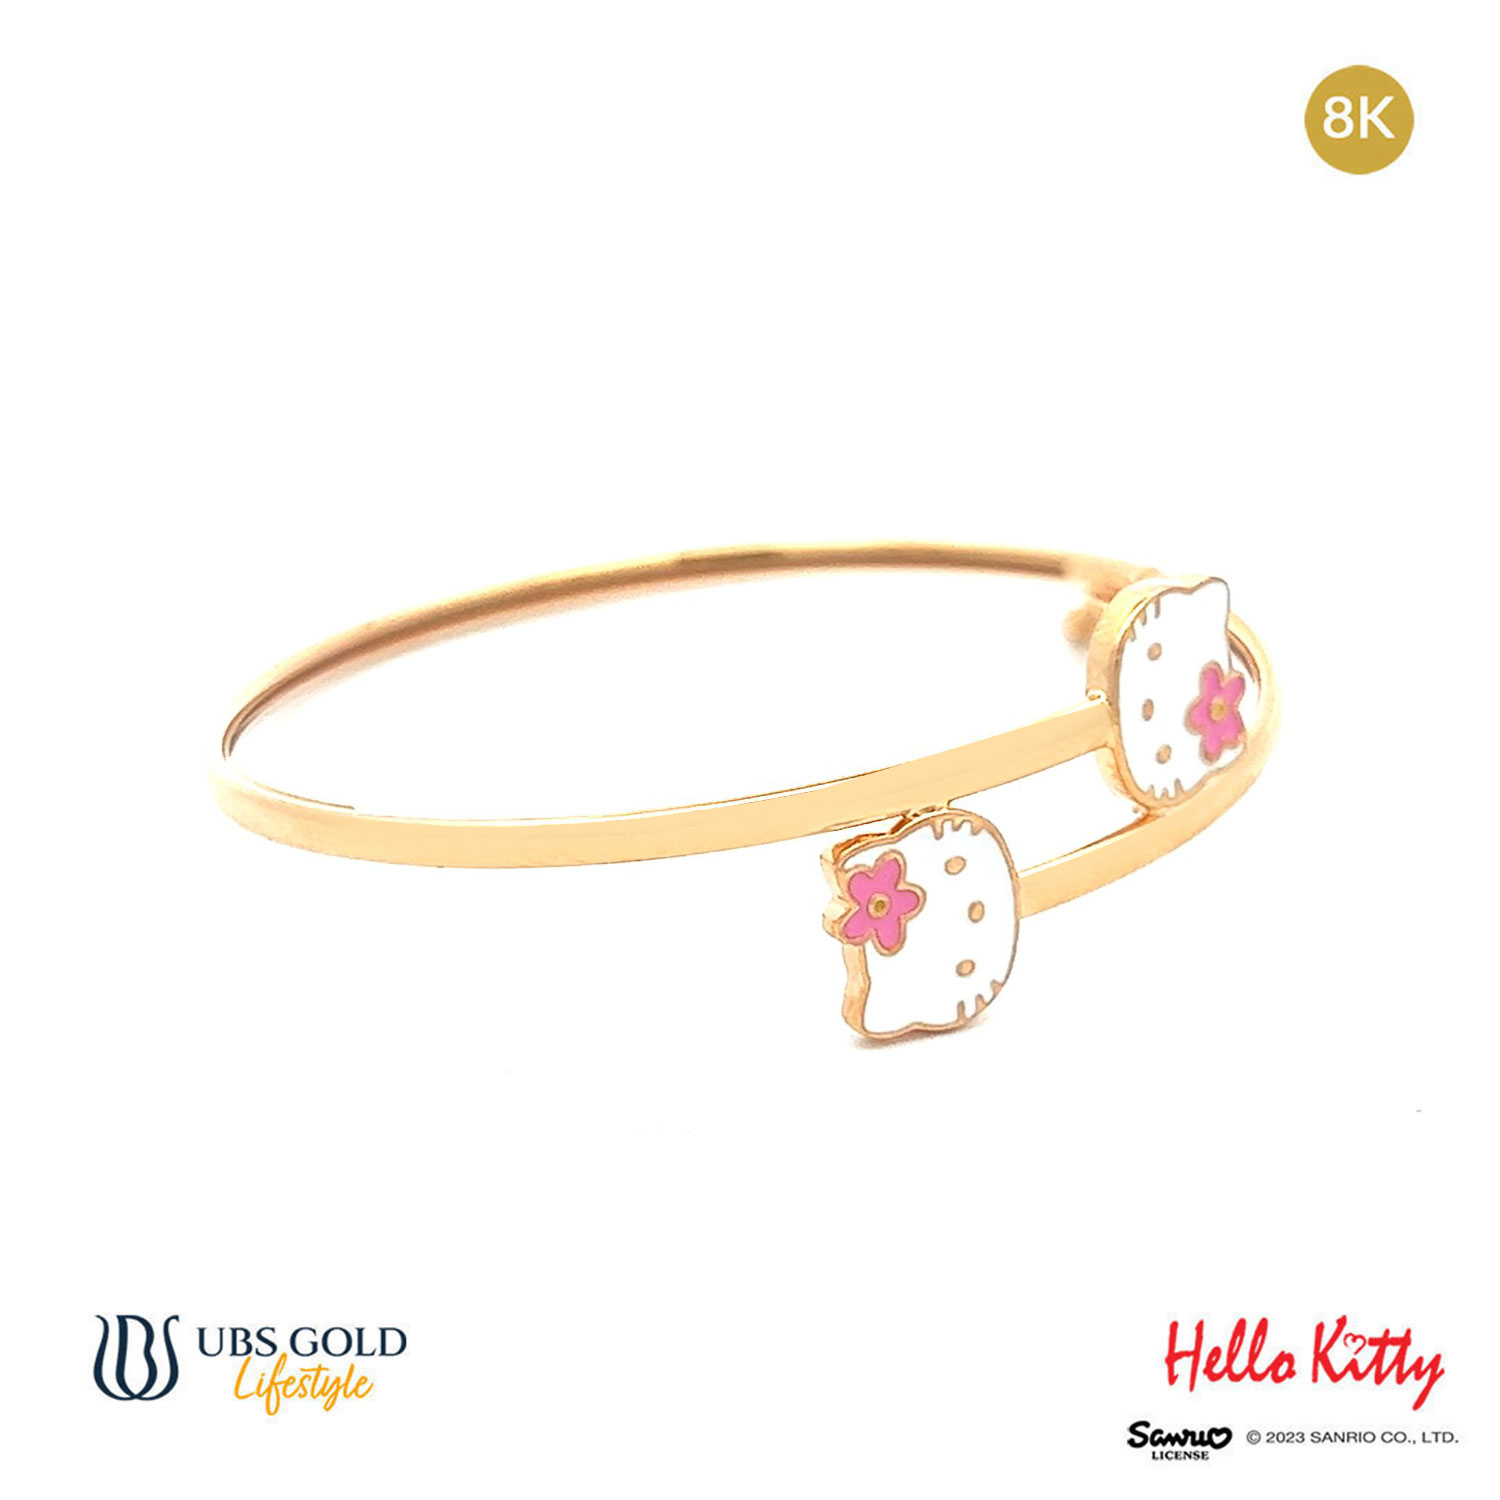 UBS Gelang Emas Bayi Sanrio Hello Kitty - Vgz0042K - 8K